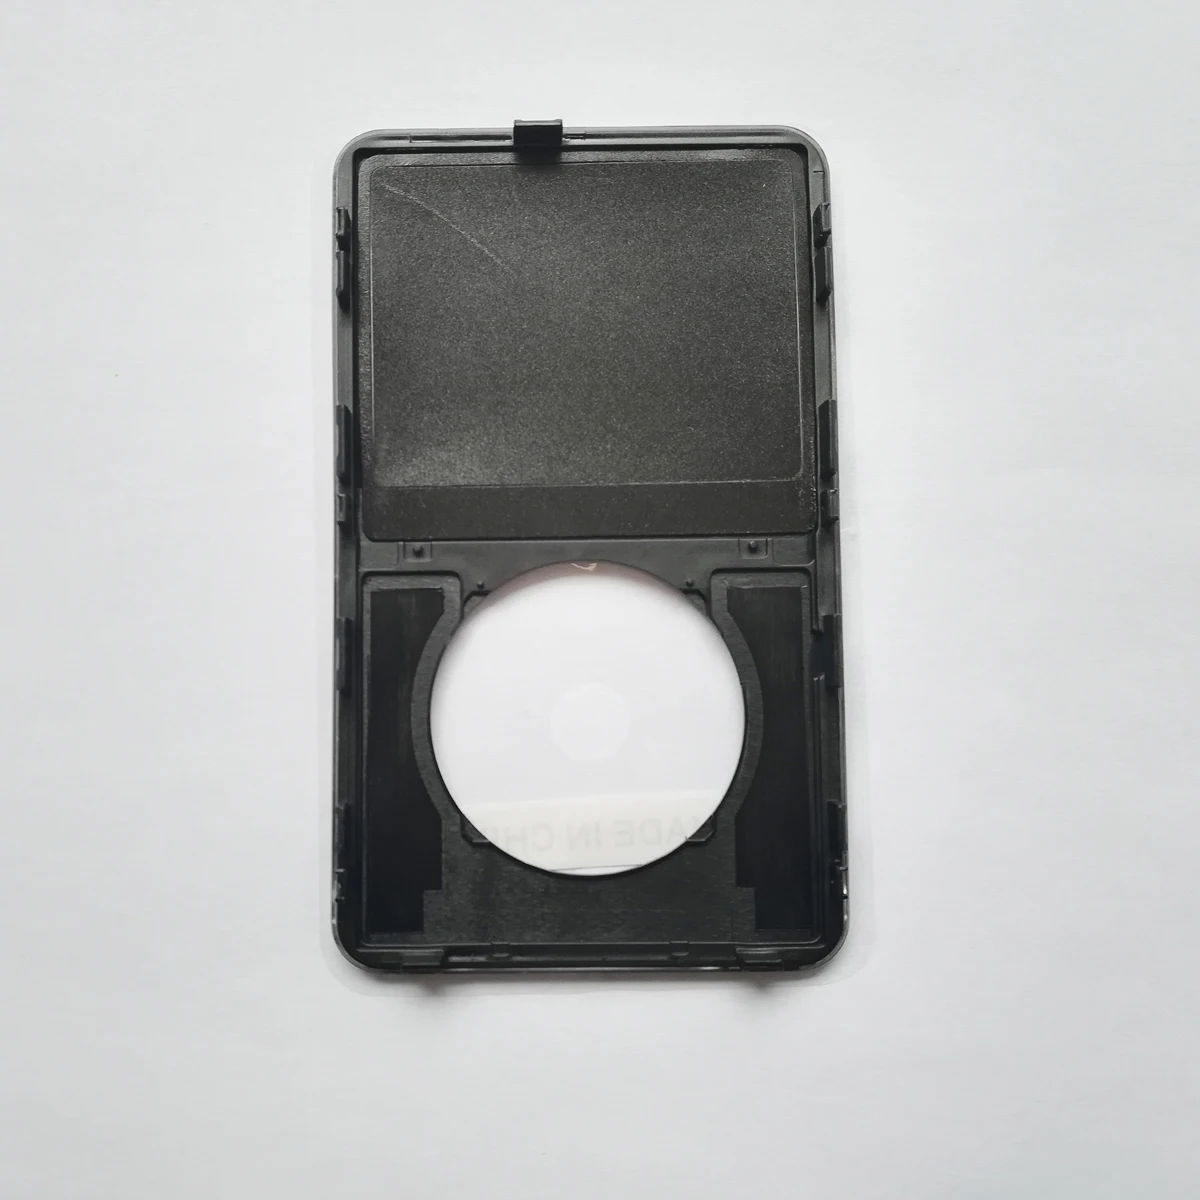 Plasitc Передняя Лицевая панель корпус чехол для iPod 5th Gen видео 30 Гб 60 ГБ 80 ГБ для iPod Video A1136